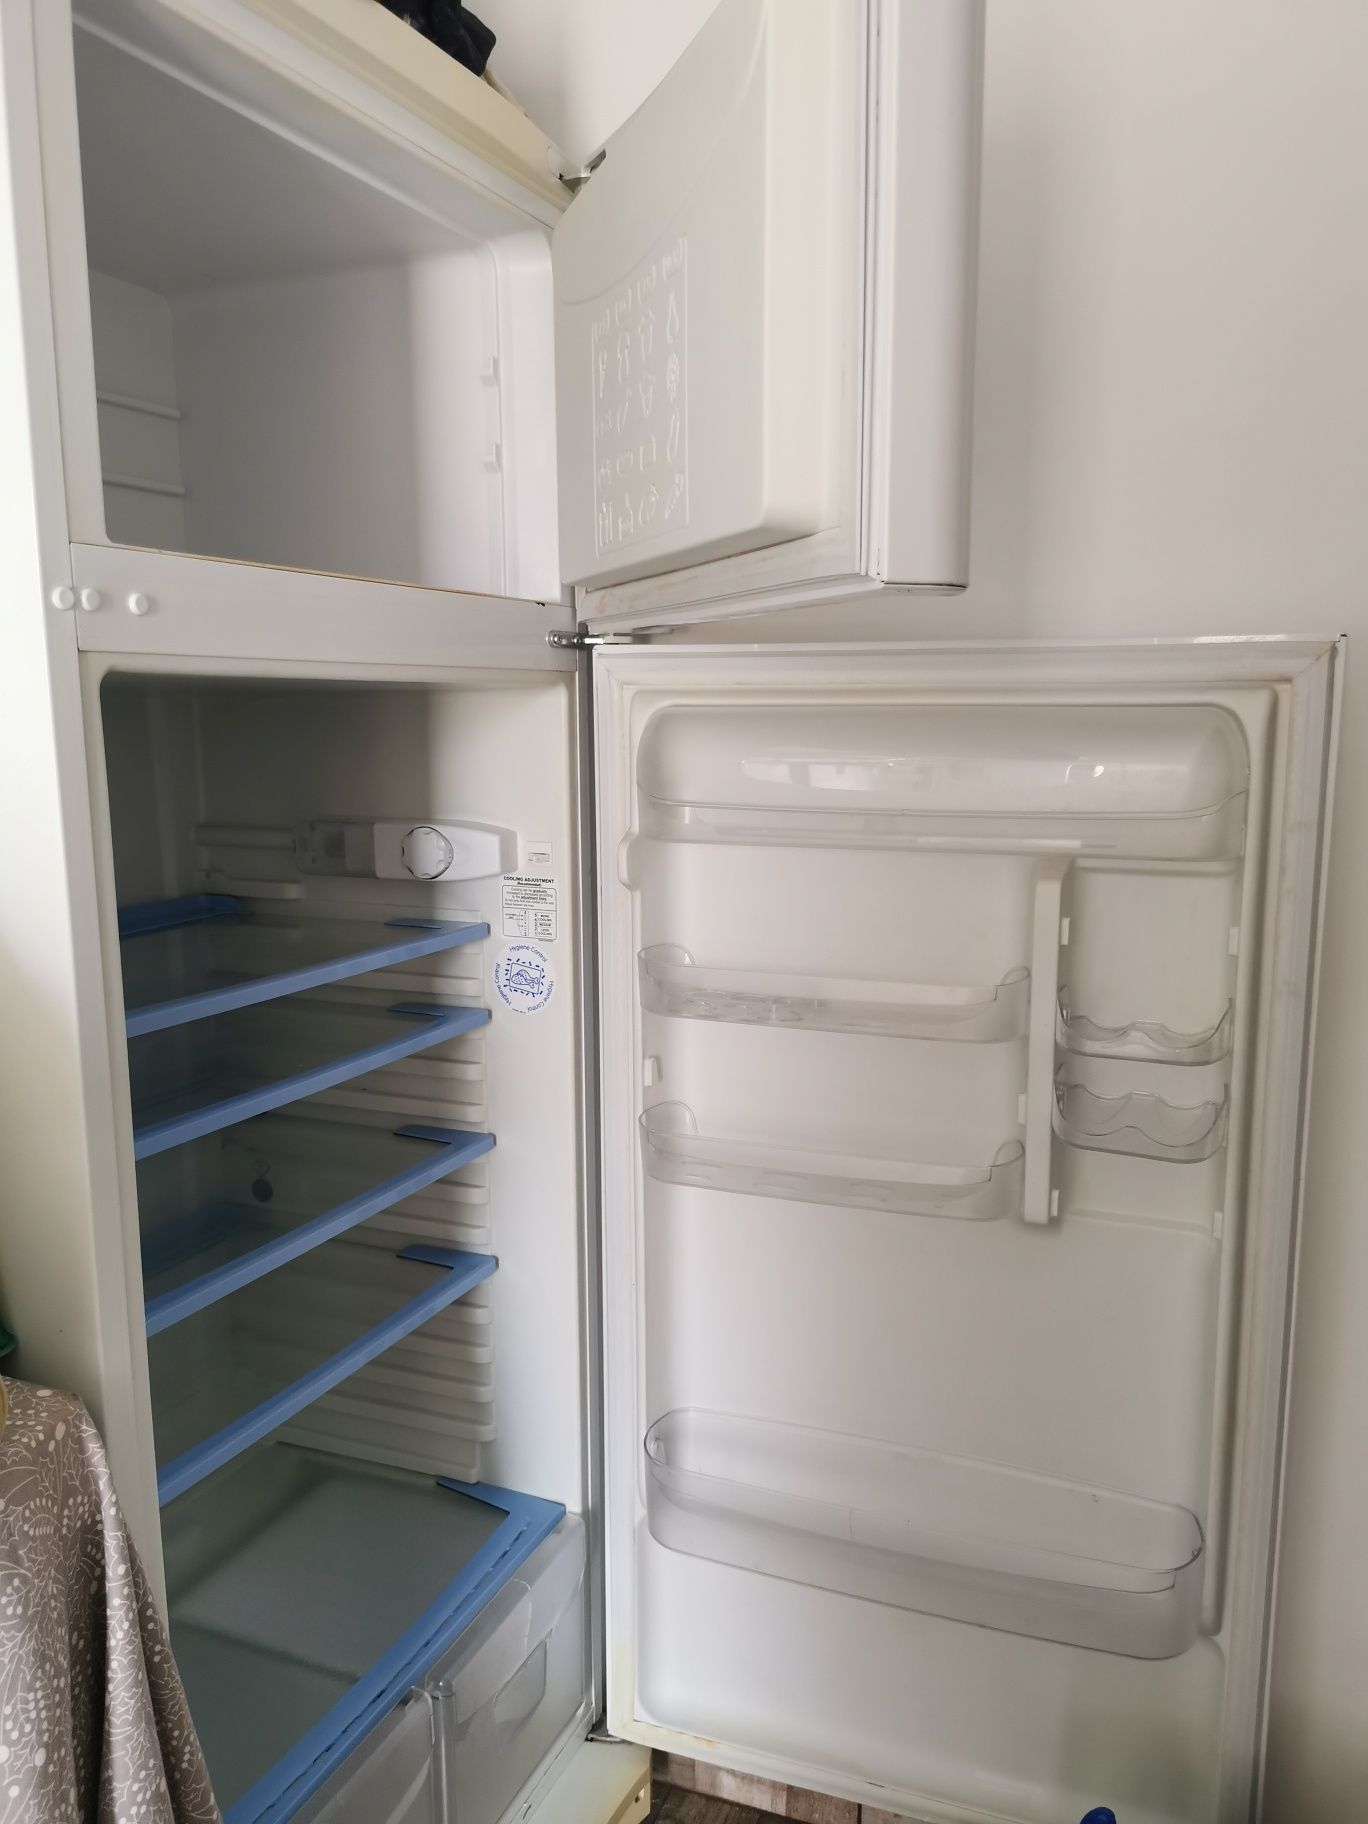 Vand frigider cu congelator.